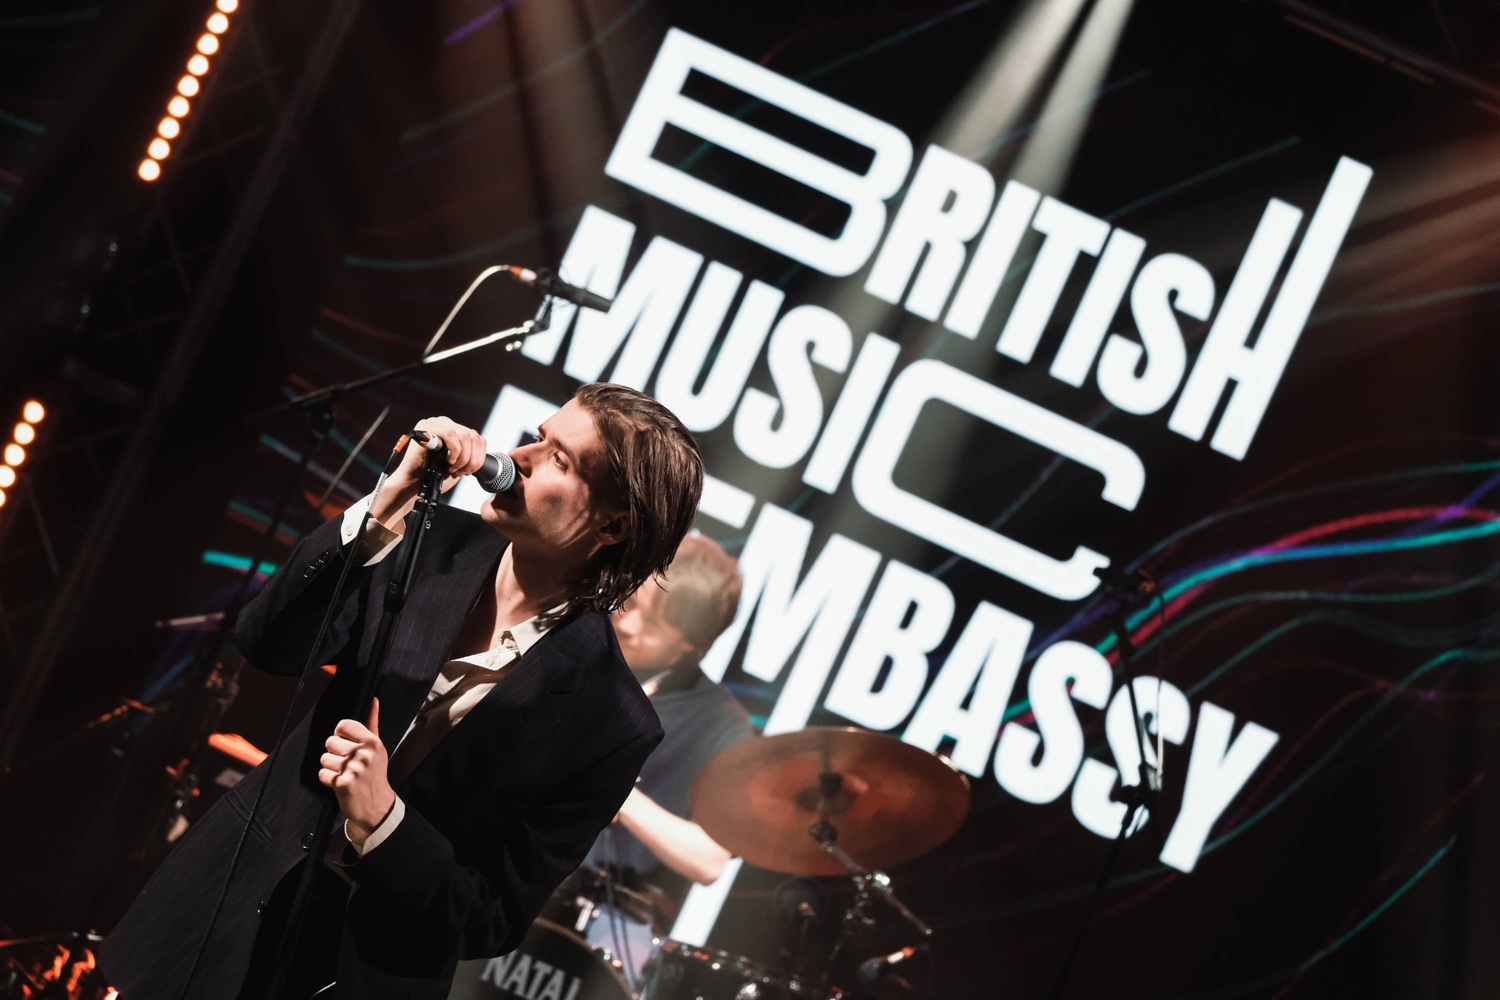 Watch more performances from SXSW 2021’s British Music Embassy showcase